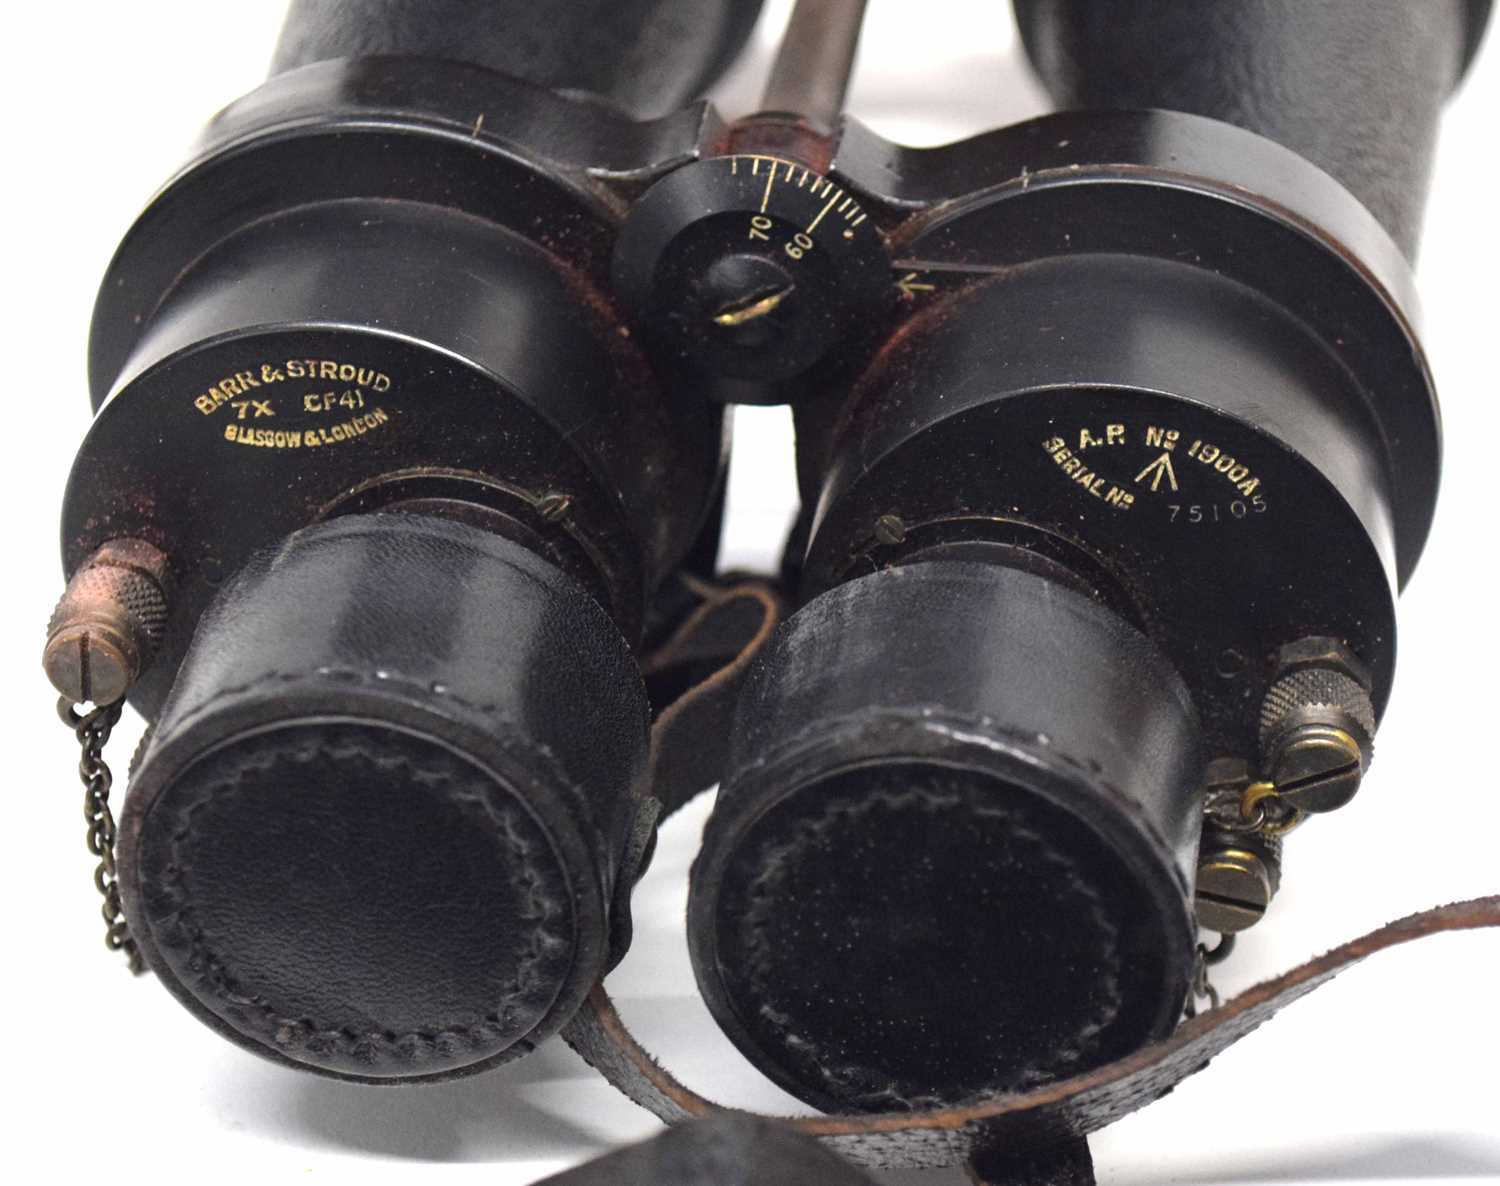 Pair of WWII Barr & Stroud CF41 Naval binoculars and case, serial no 75105 - Image 2 of 4